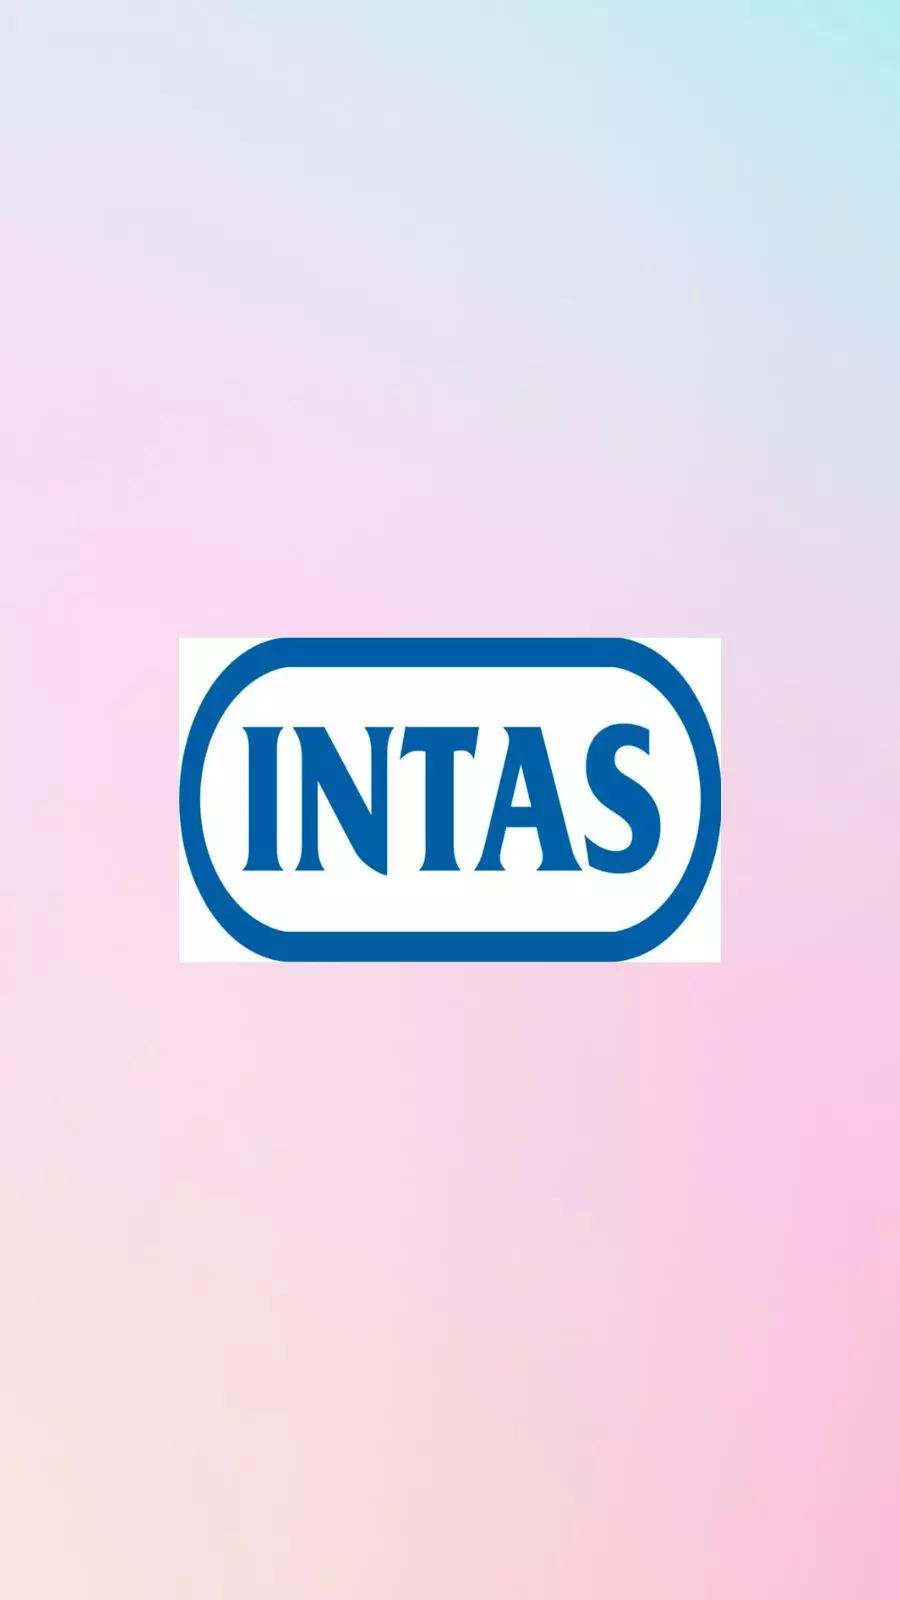 INTAS.tech joins ITSA